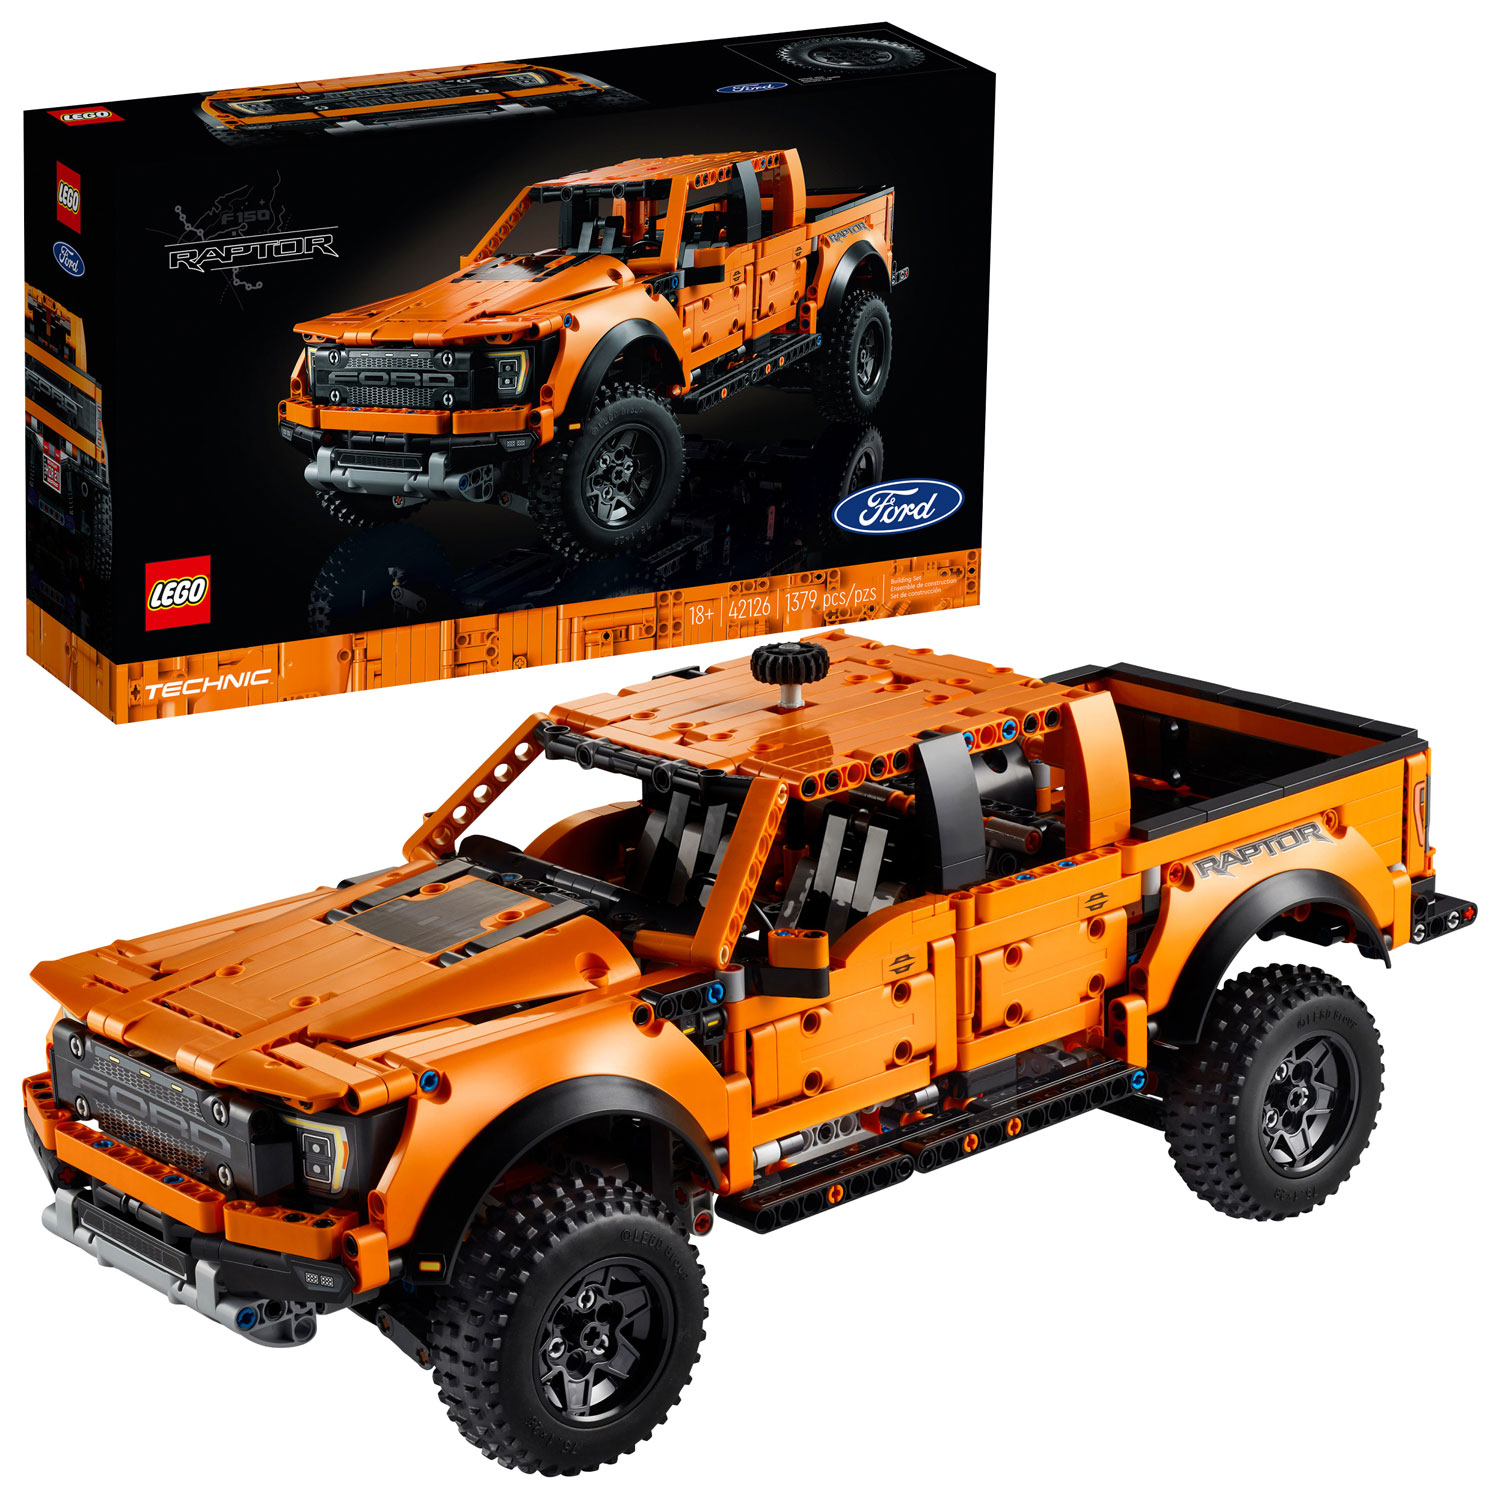 LEGO Technic: Ford F-150 Raptor - 1379 Pieces (42126)